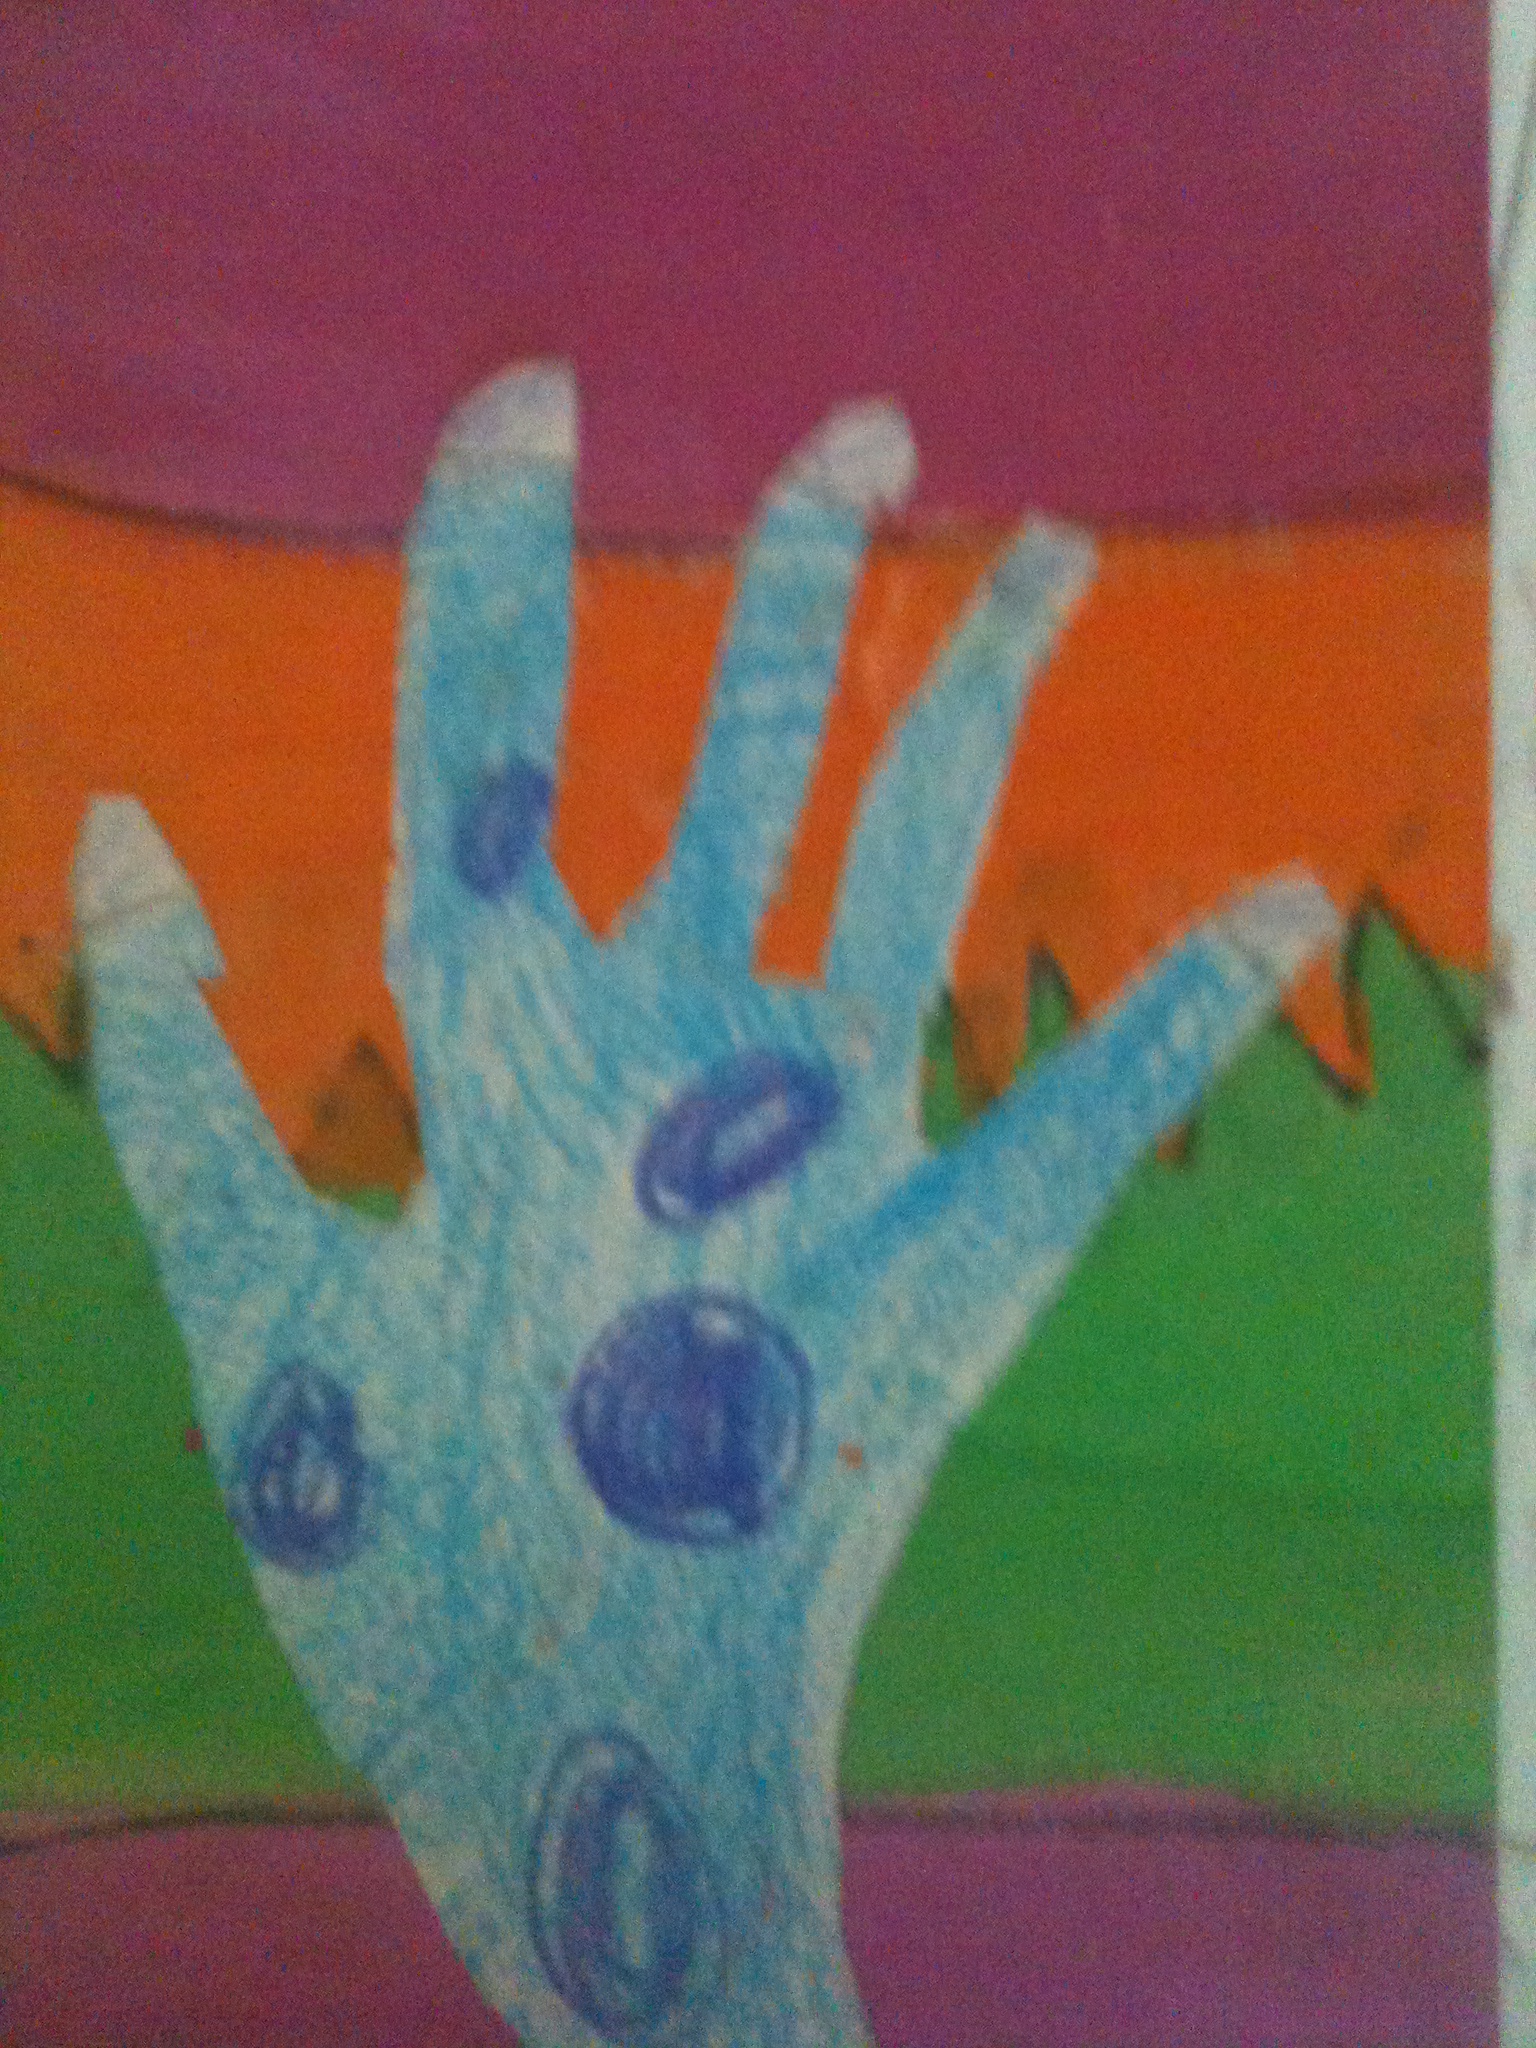 secondary Monster hand